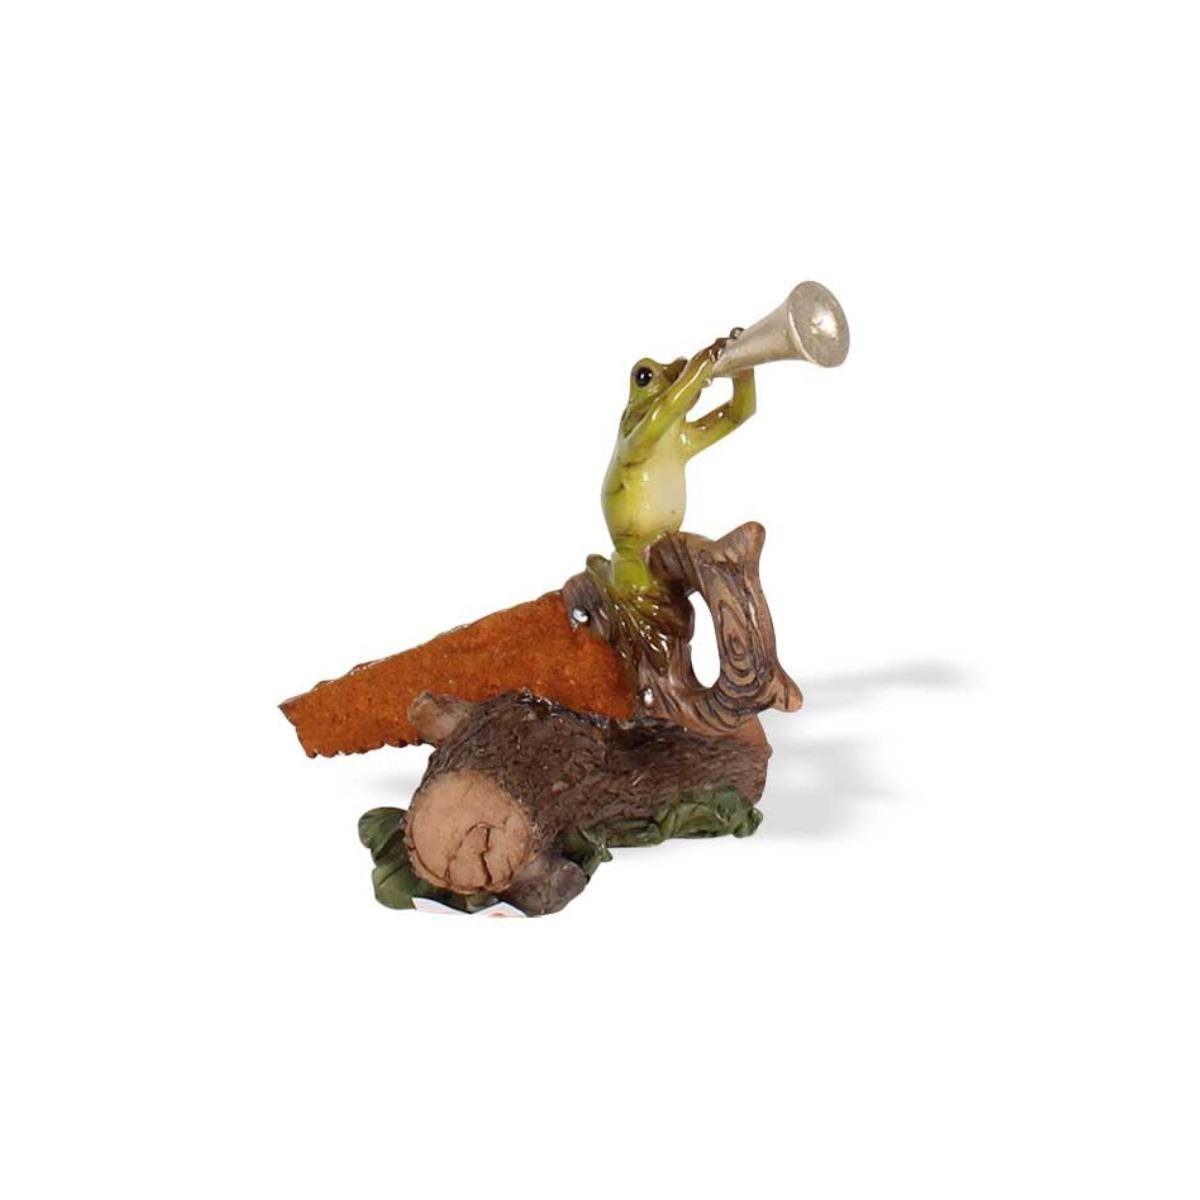 Seyko-Geschenke Dekofigur 091051 - Keramik "Frosch Erwin" auf Säge, 8 cm